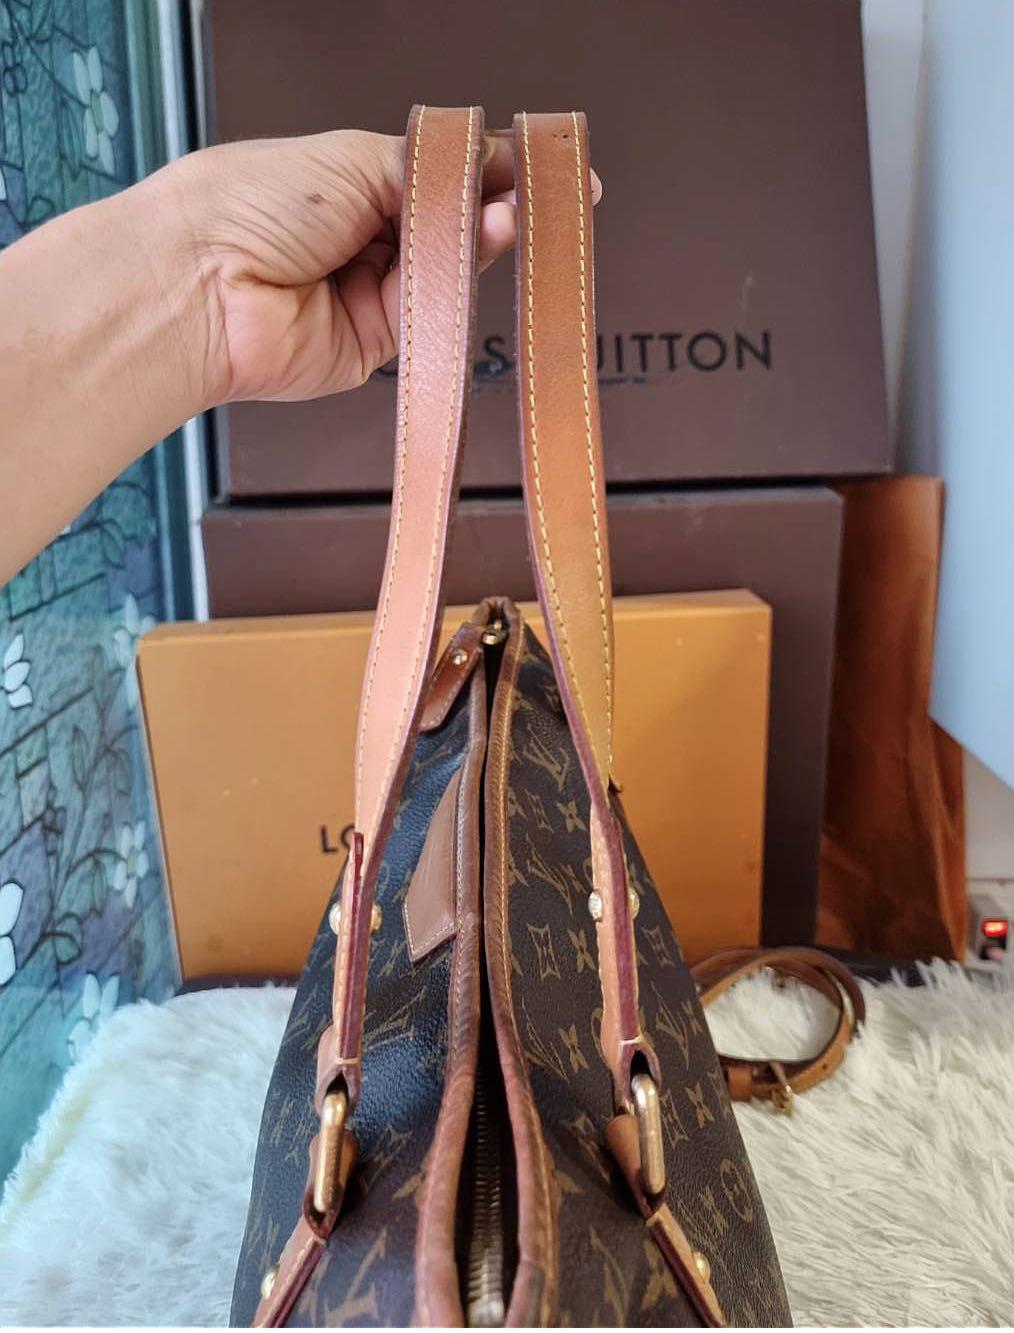 Pre-owned Louis Vuitton Estrela Mm Tote Bag In Brown